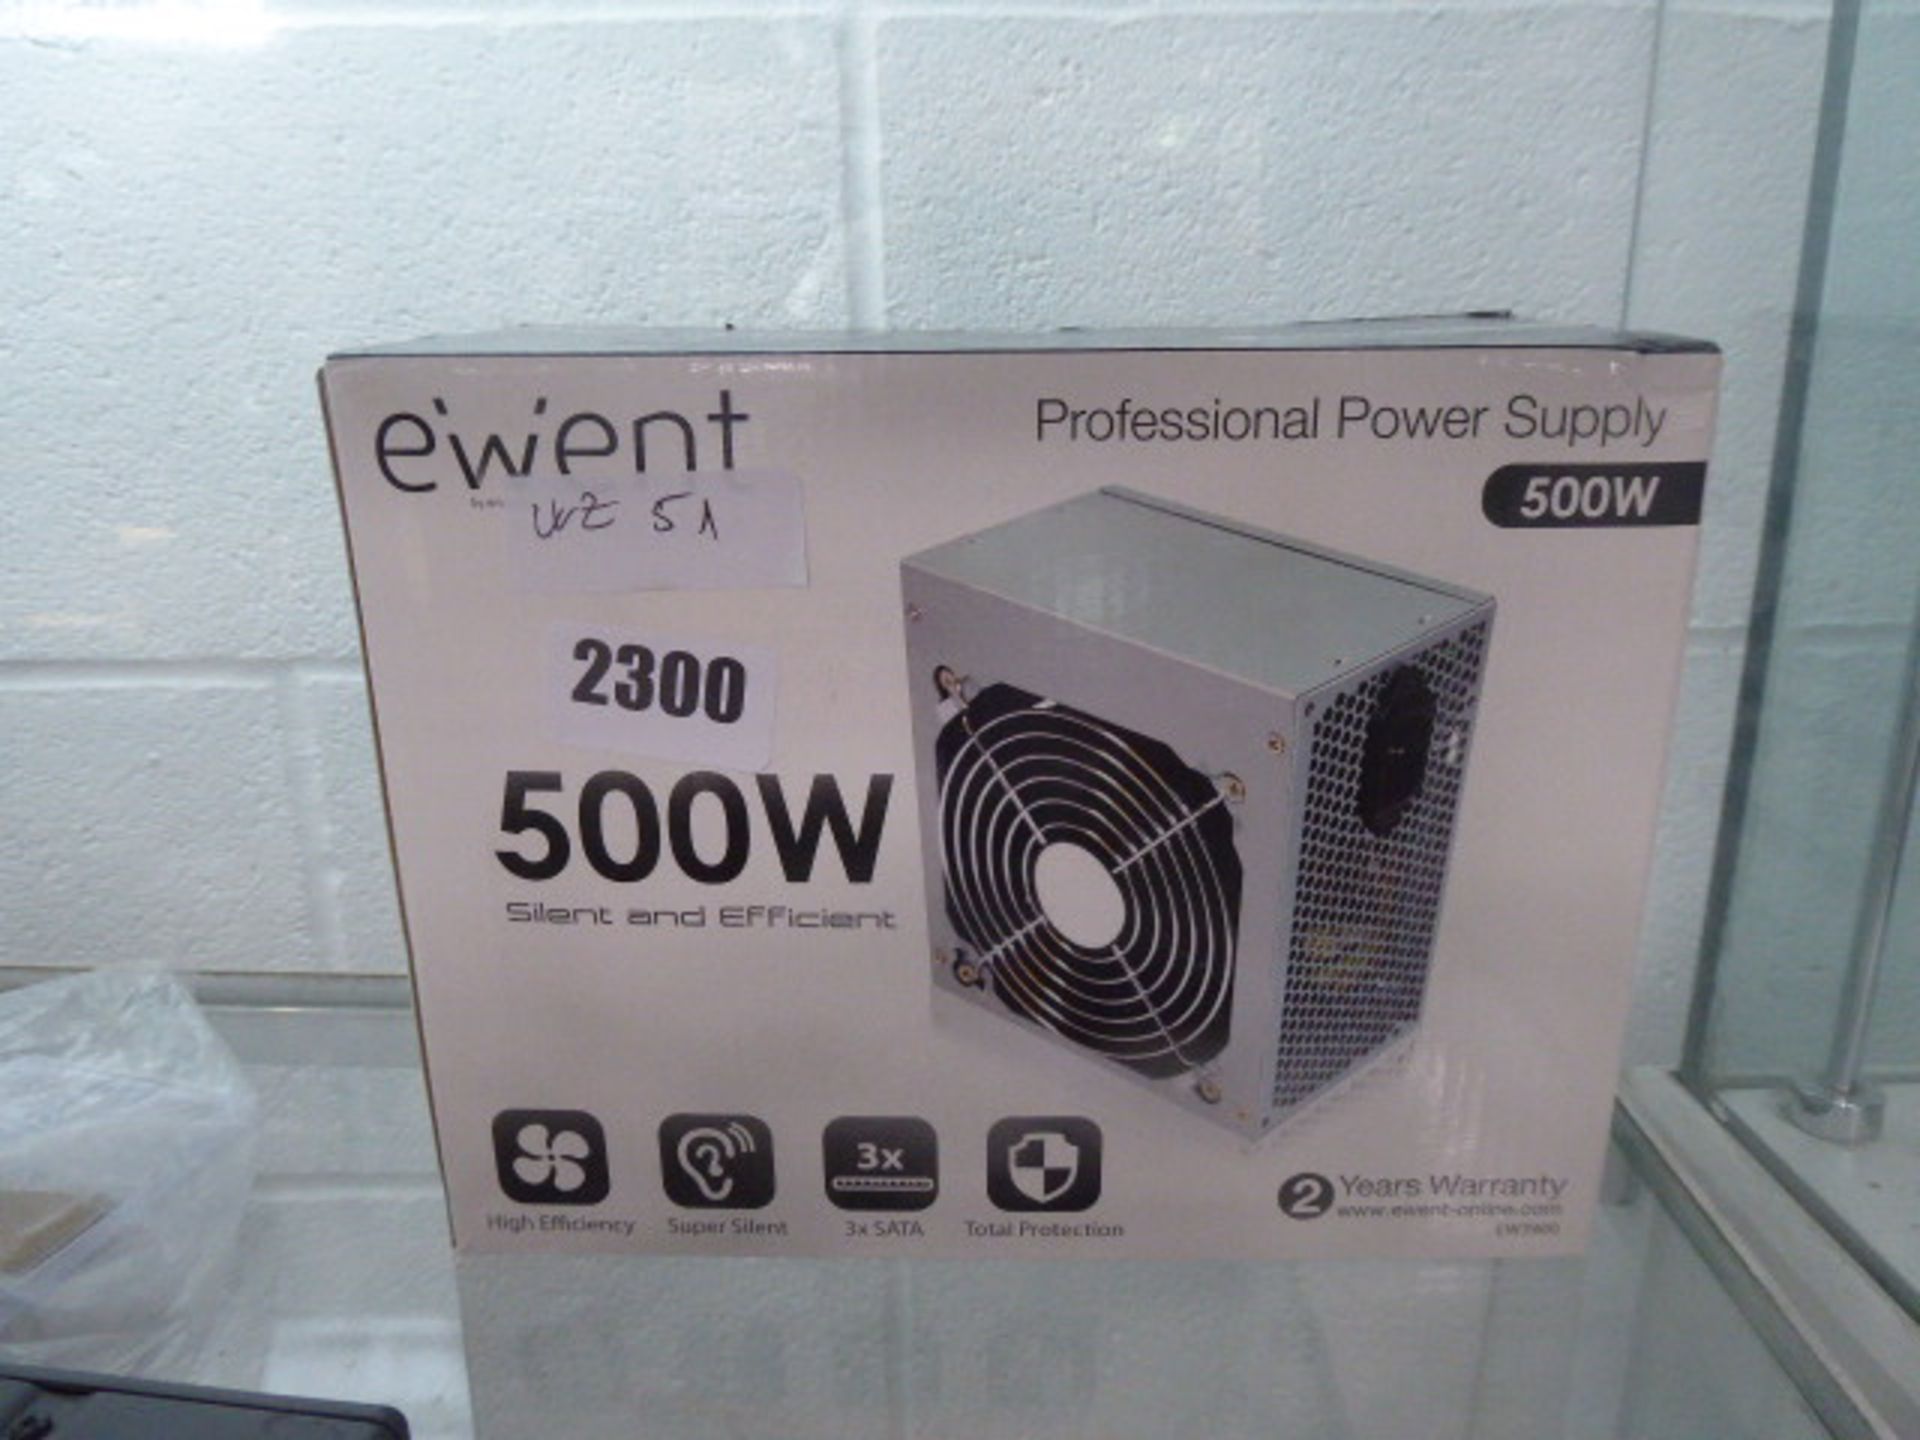 Professional 500 watt power supply in box